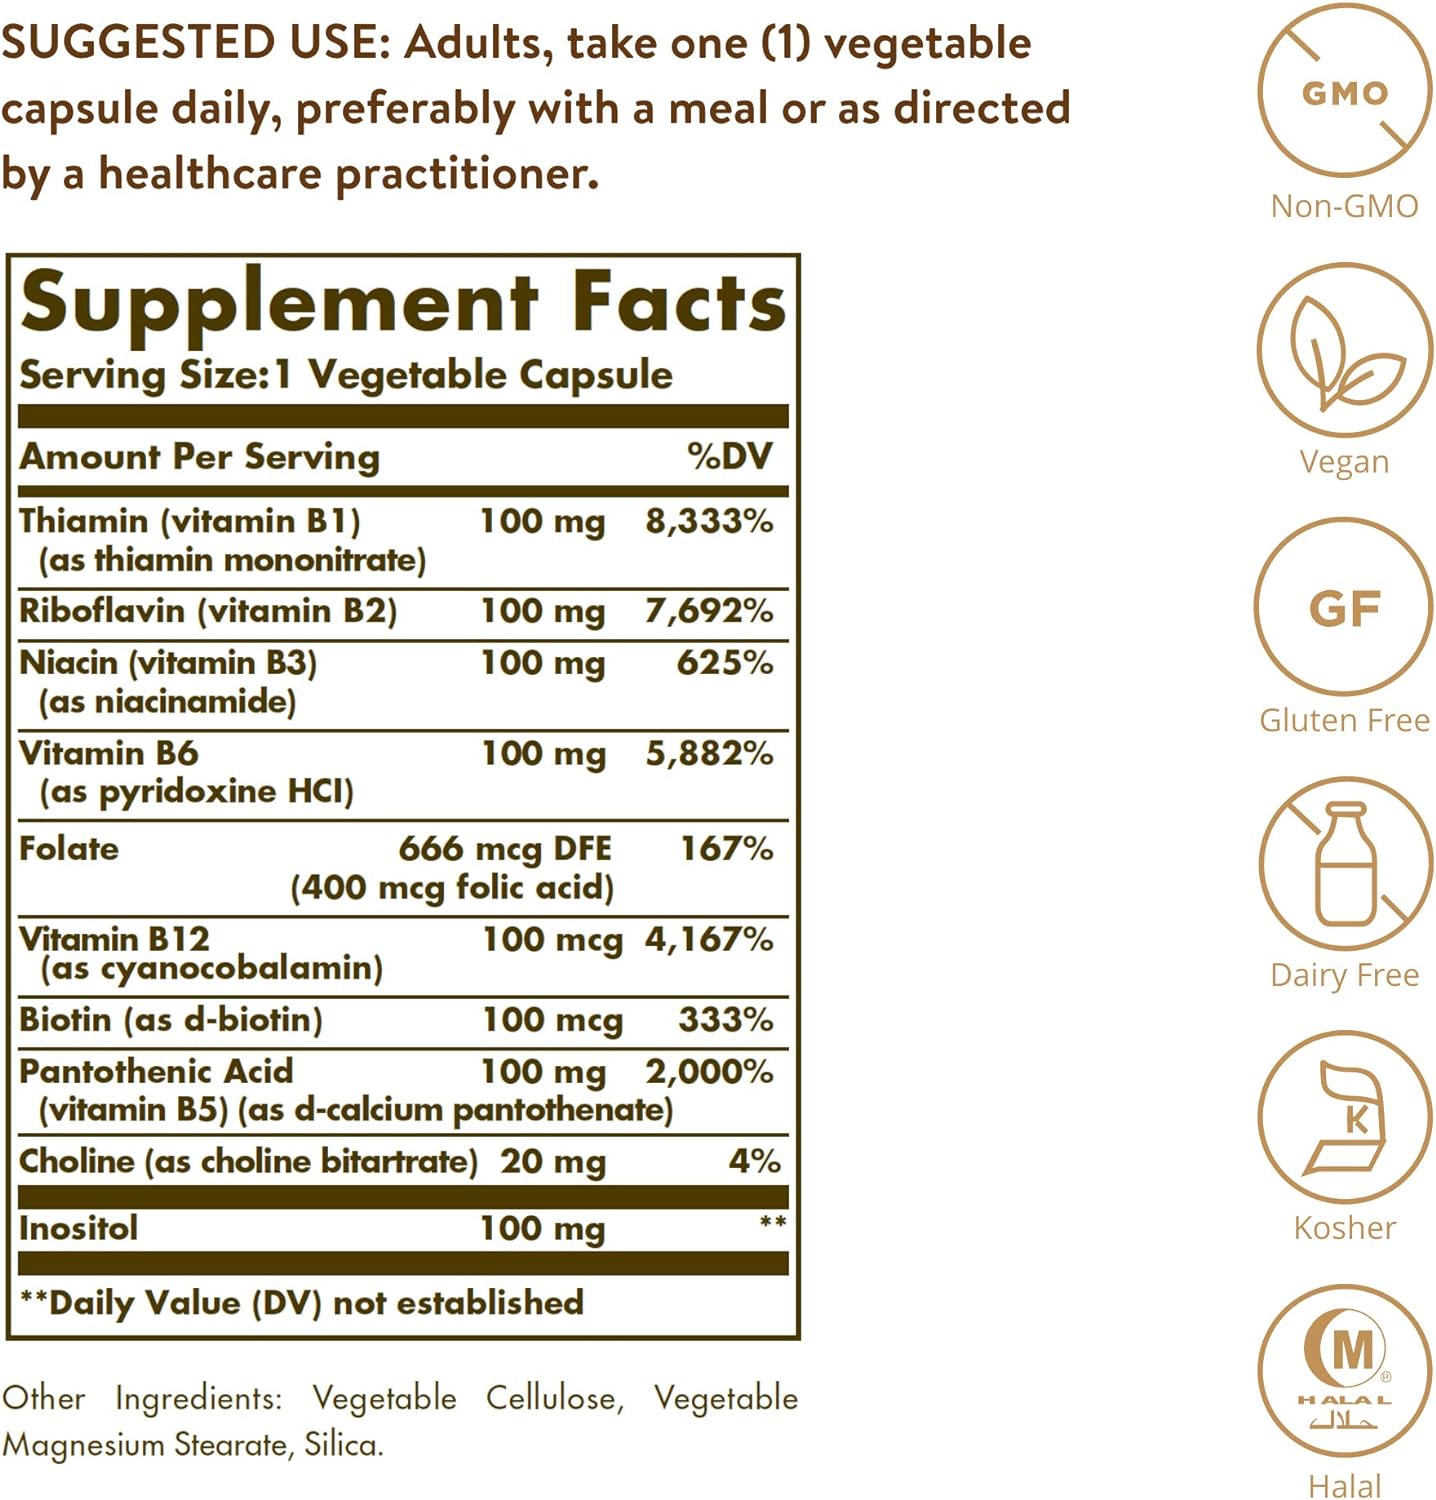 Solgar B-Complex 100, 250 Vegetable Capsules - Heart Health - Nervous System- Supports Energy Metabolism - Non-GMO, Vegan, Gluten / Dairy Free, Kosher, Halal - 250 Servings